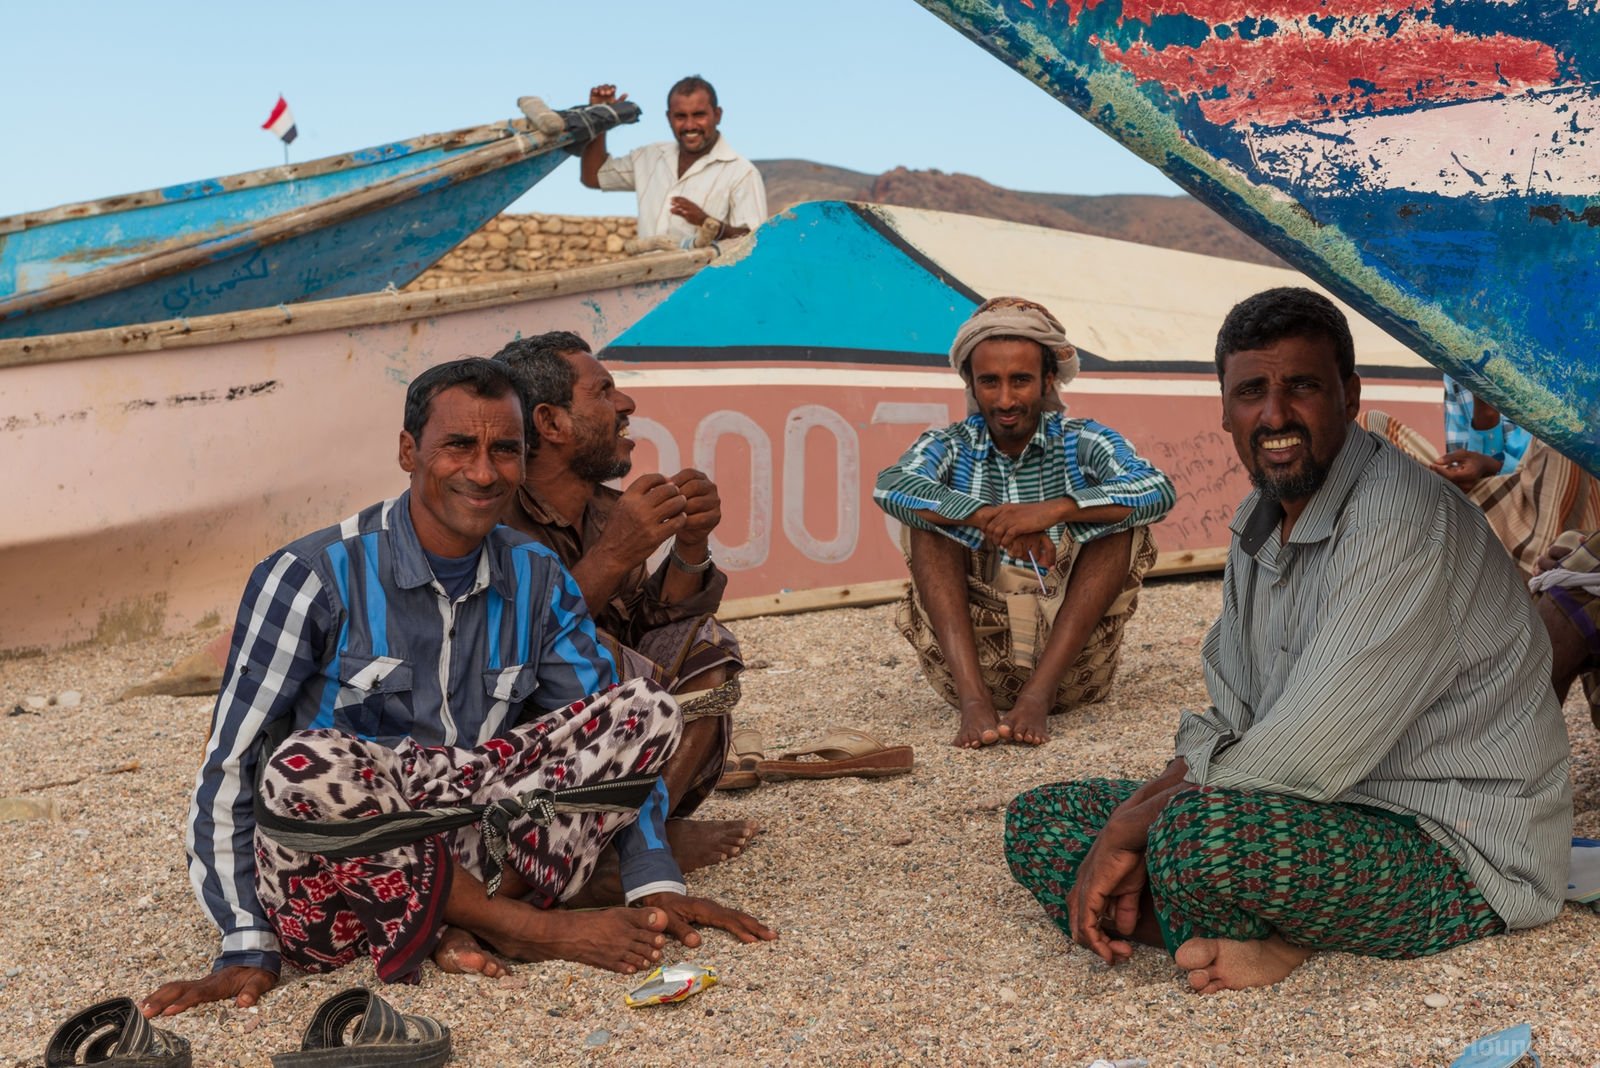 Image of Qalansiyah Village, Socotra by Luka Esenko